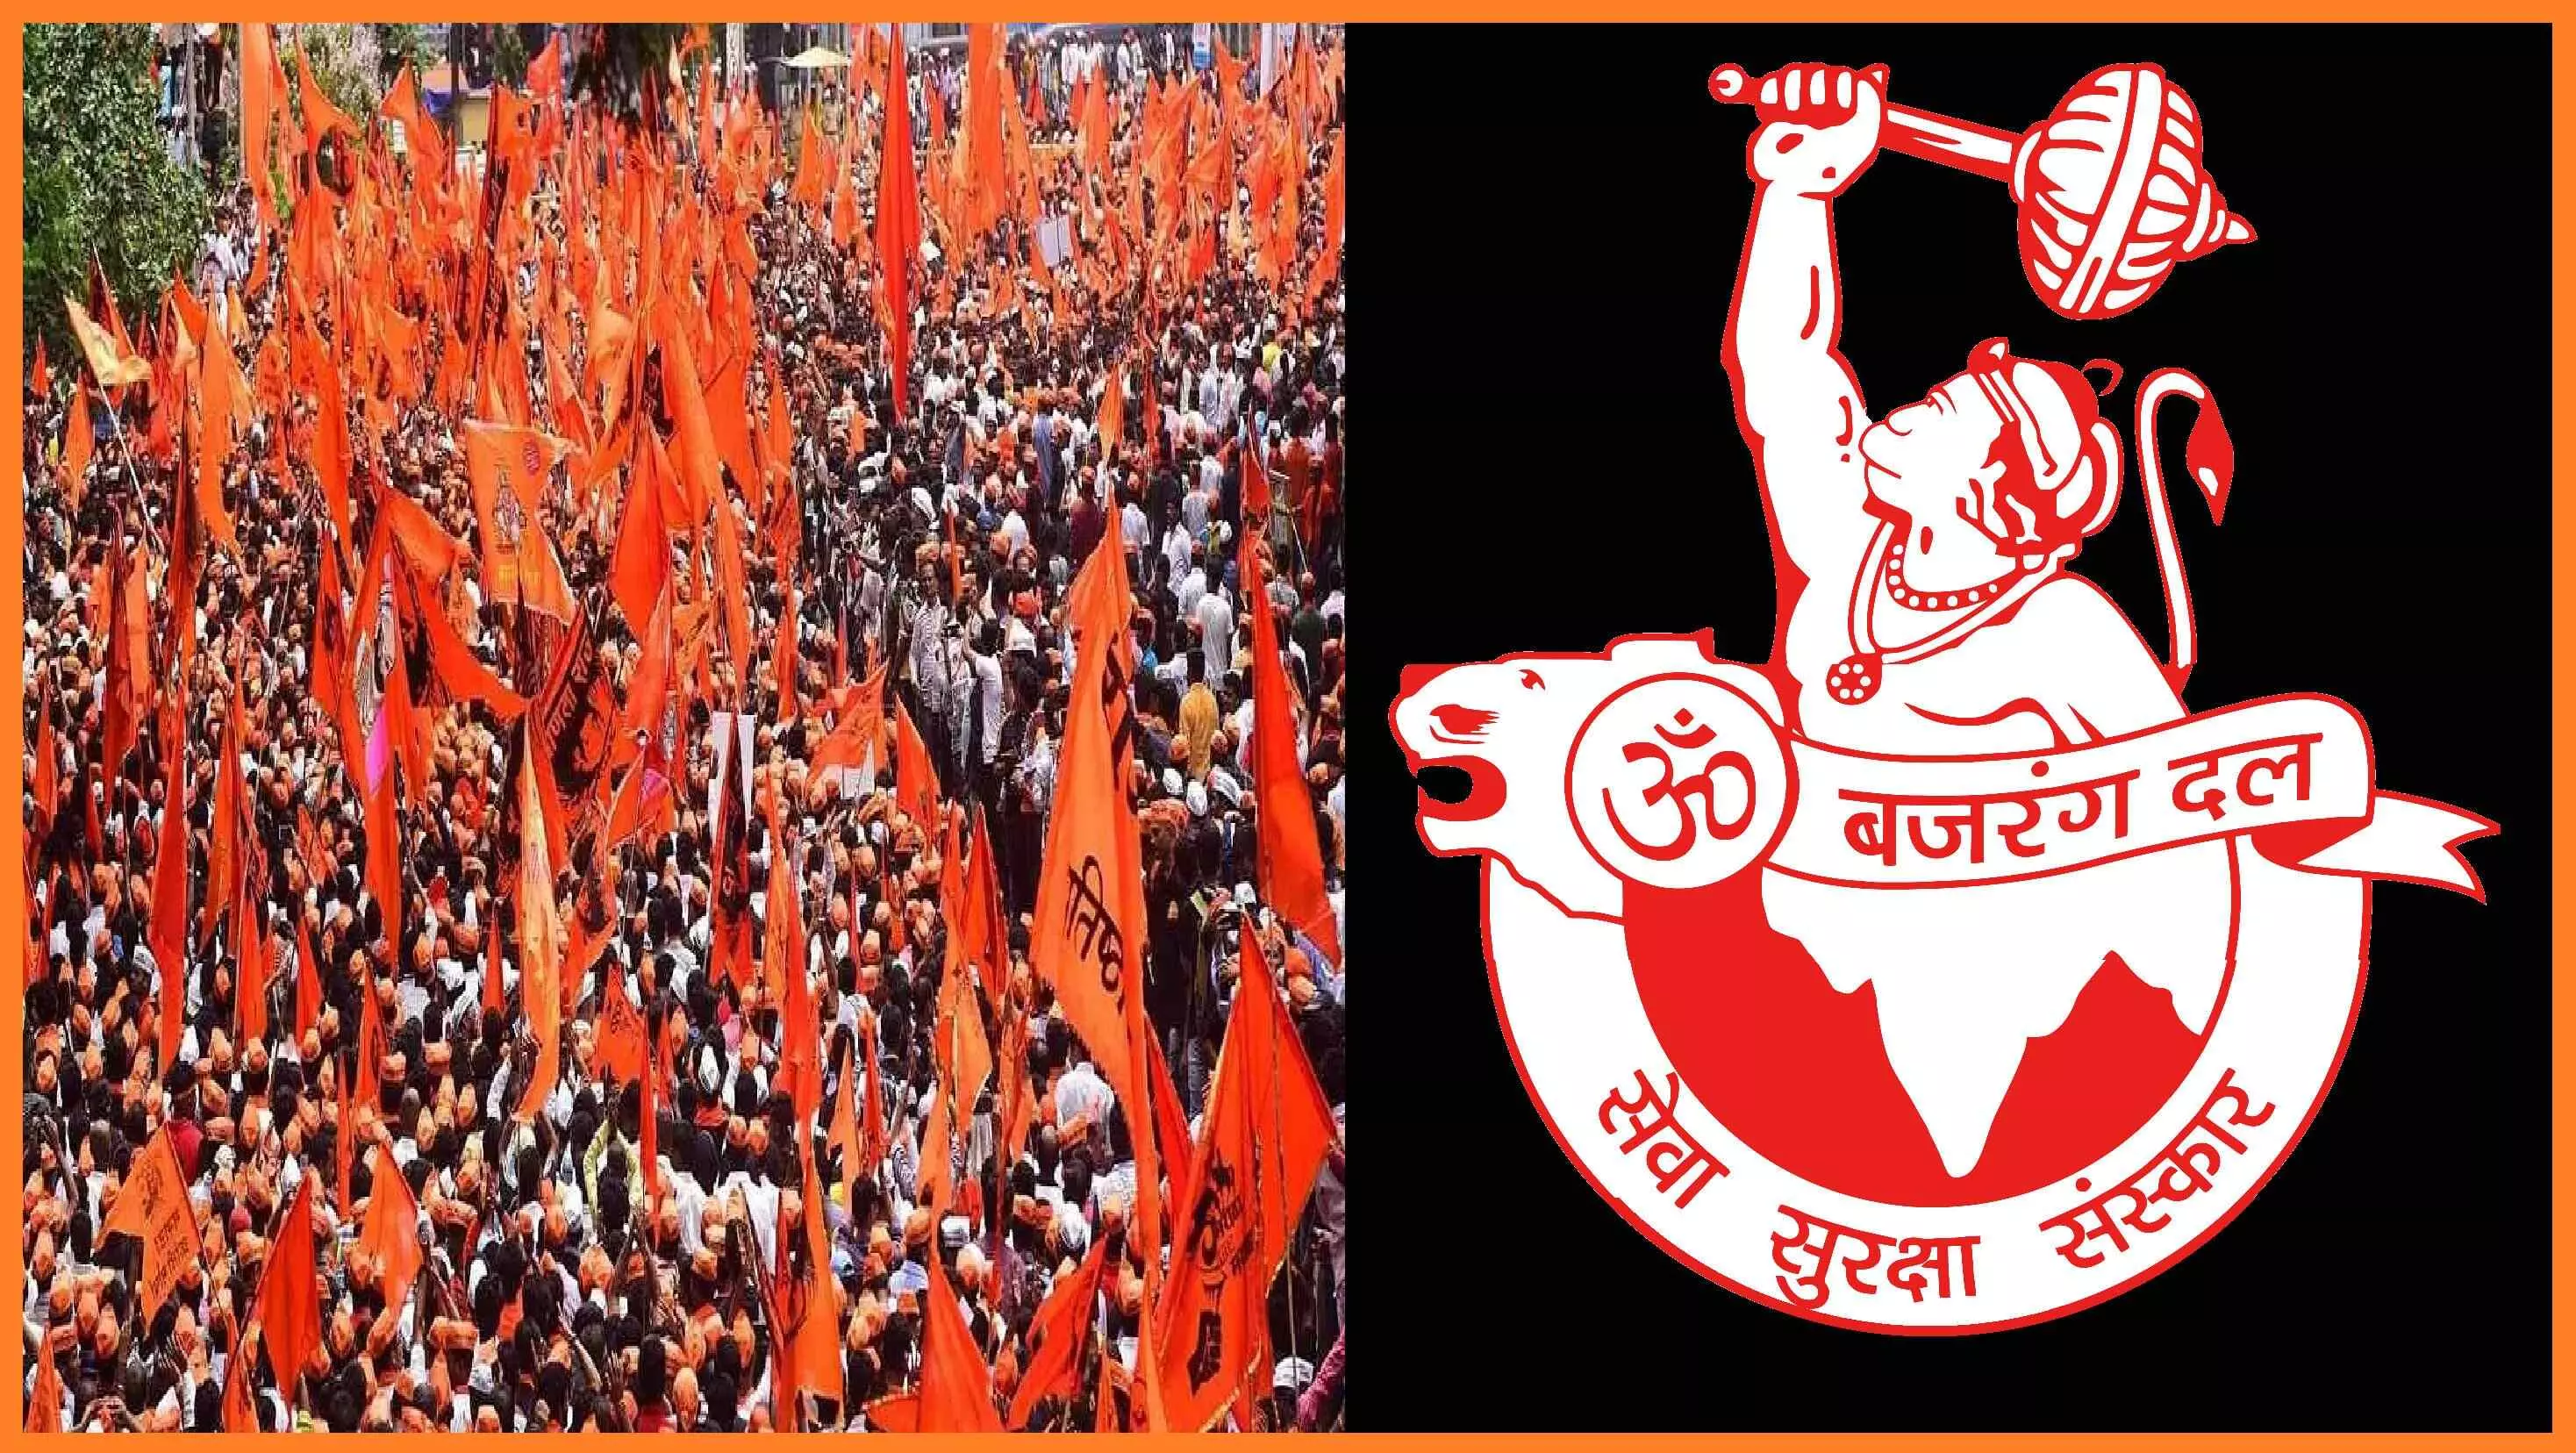 Bajrang Dal to hold Hanuman Chalisa chanting across country on May 9